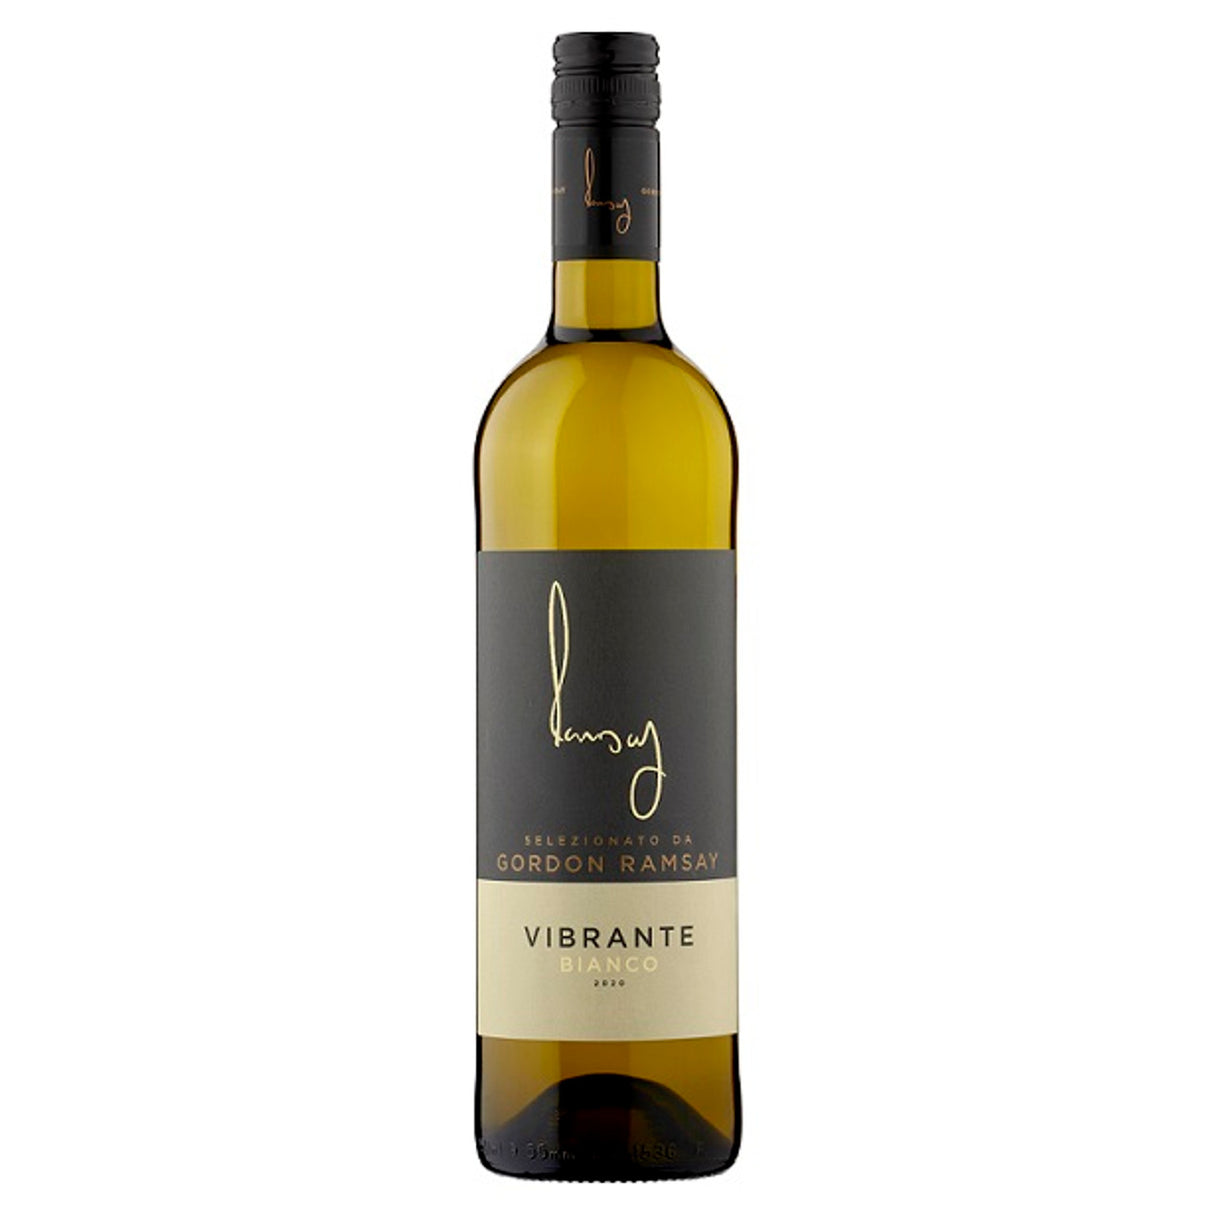 Gordon Ramsay 'Vibrante' Bianco, Tuscany  2022 (12 bottles)